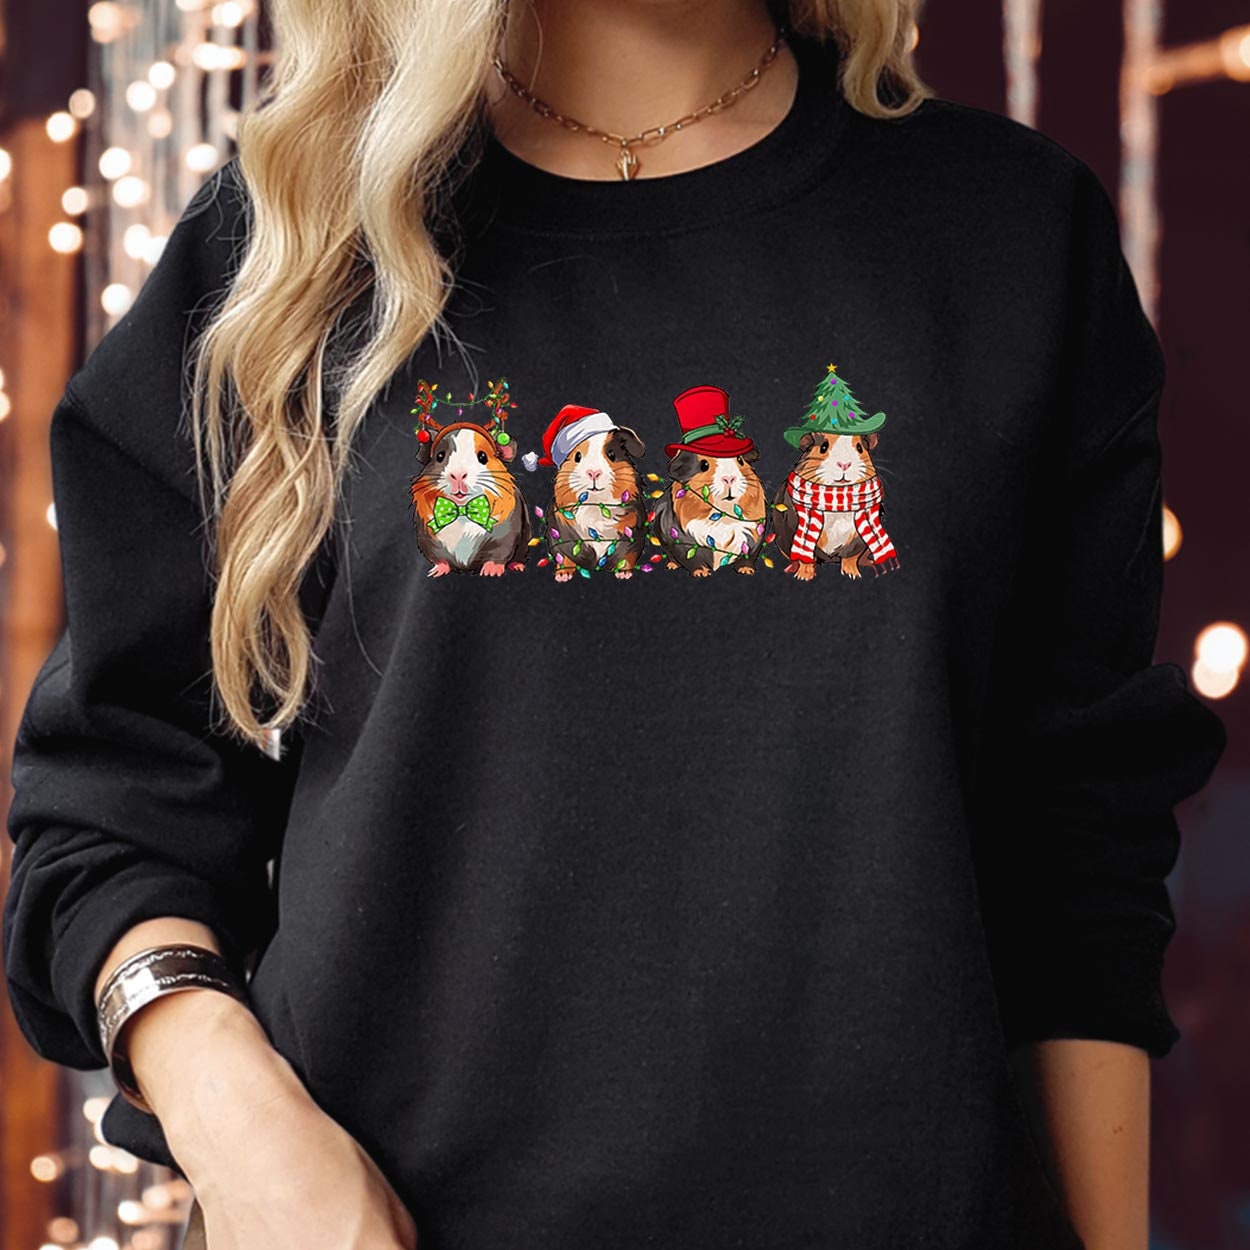 Christmas Clearance Under 5.00, Christmas Sweatshirt Women Buffalo Plaid  Gnome Print Xmas Pullover Casual Long Sleeve Tunic Tops Crewneck Blouses Im